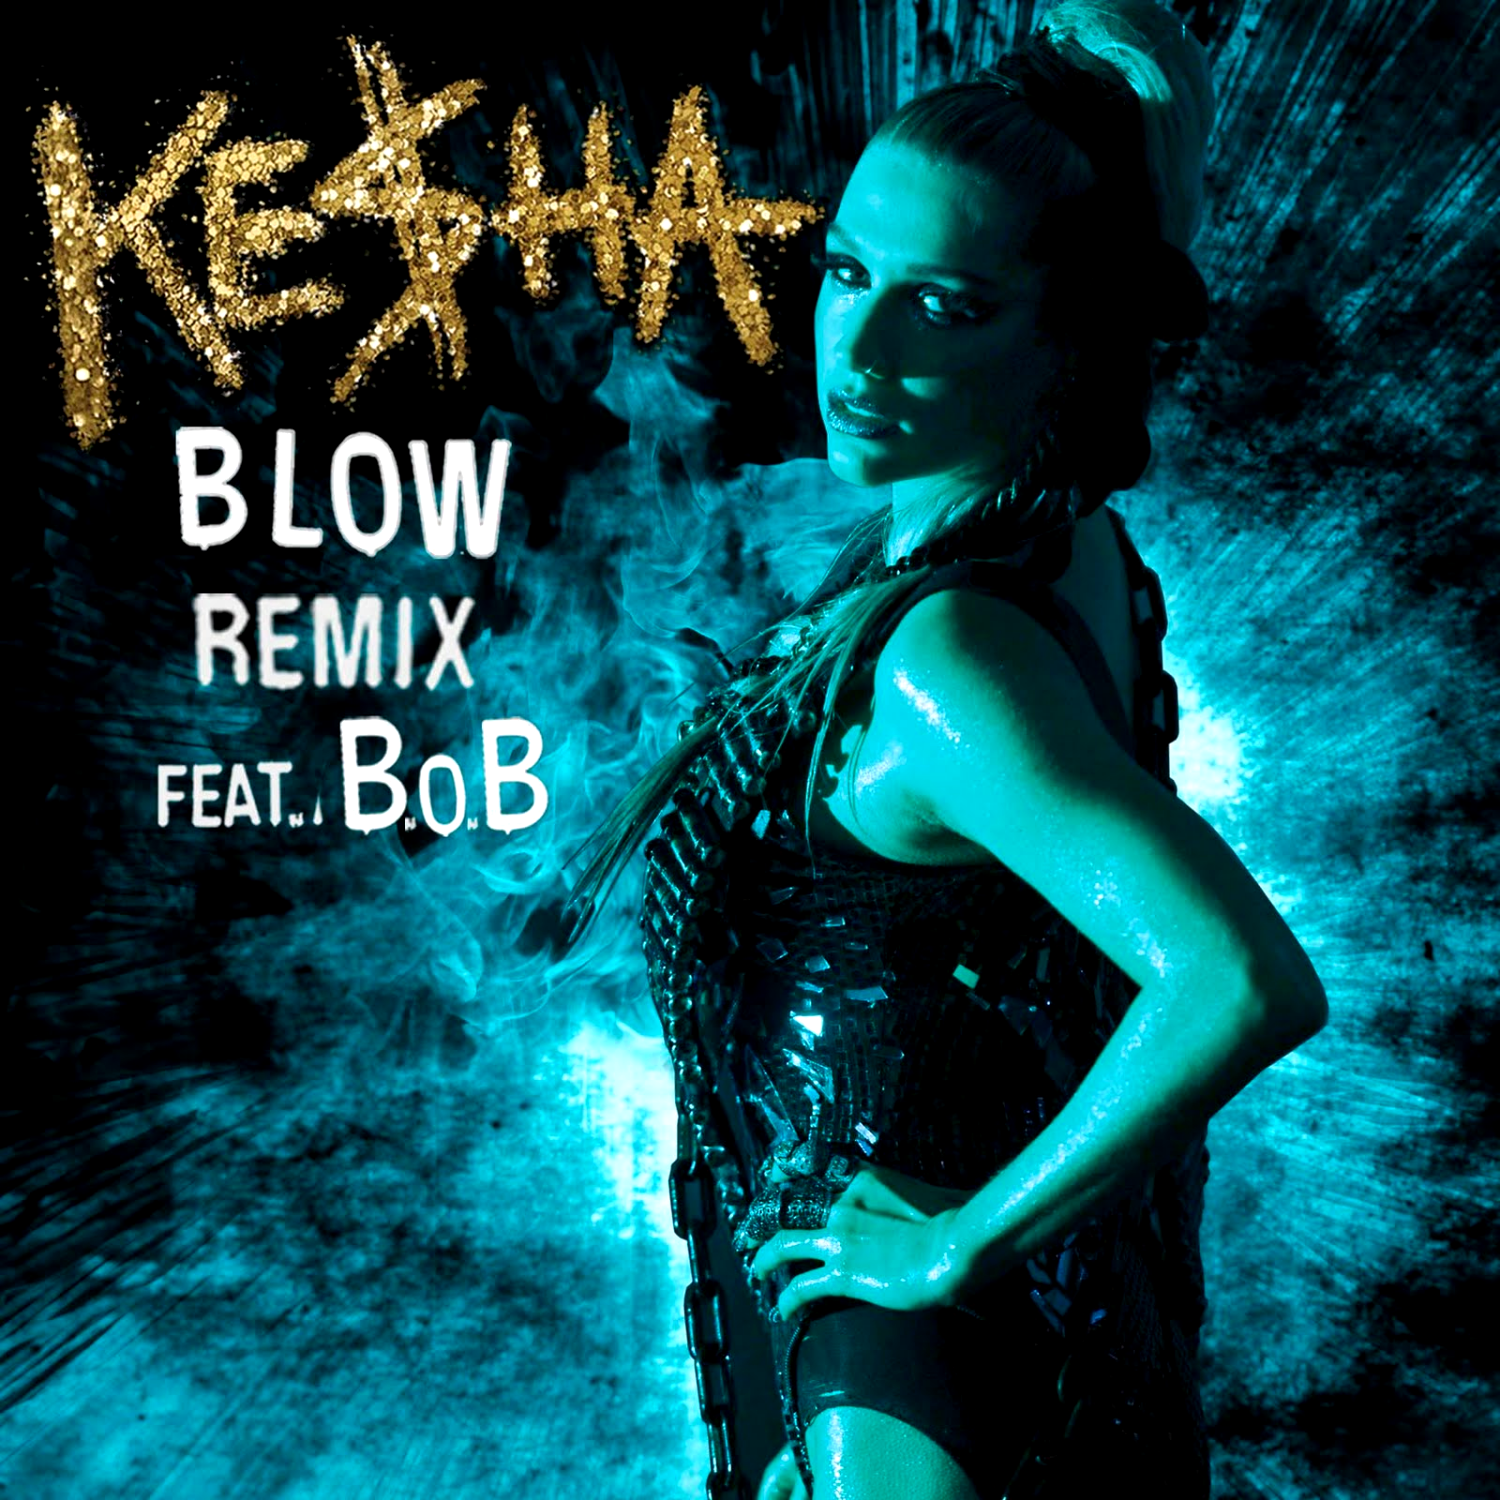 Kesha featuring B.o.B — Blow - Remix cover artwork